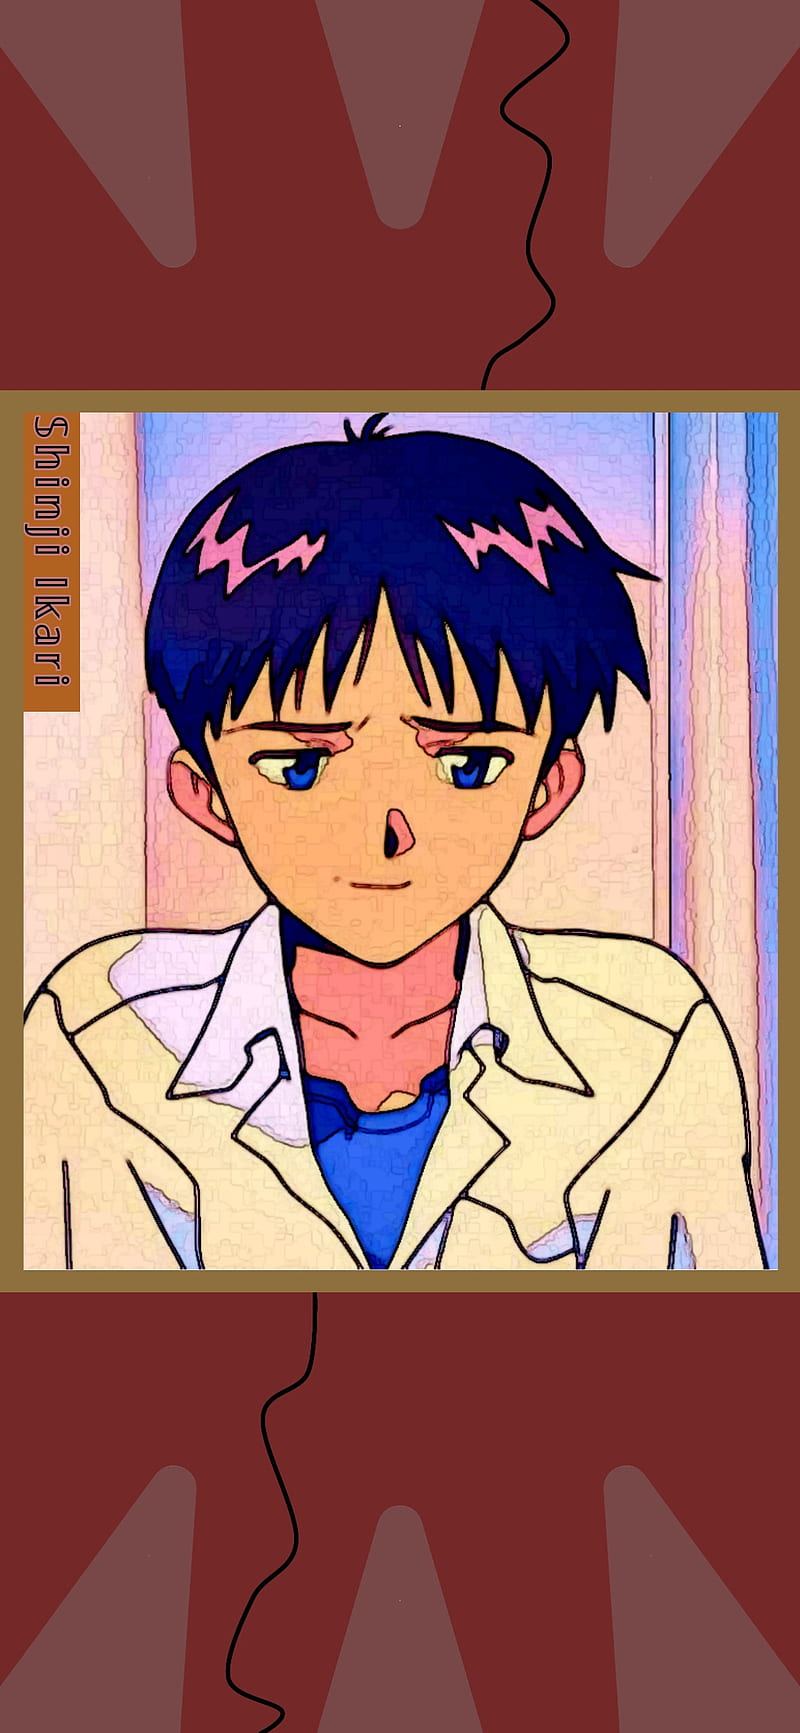 Wallpaper ID 338806  Anime Neon Genesis Evangelion Phone Wallpaper Shinji  Ikari 1228x2700 free download